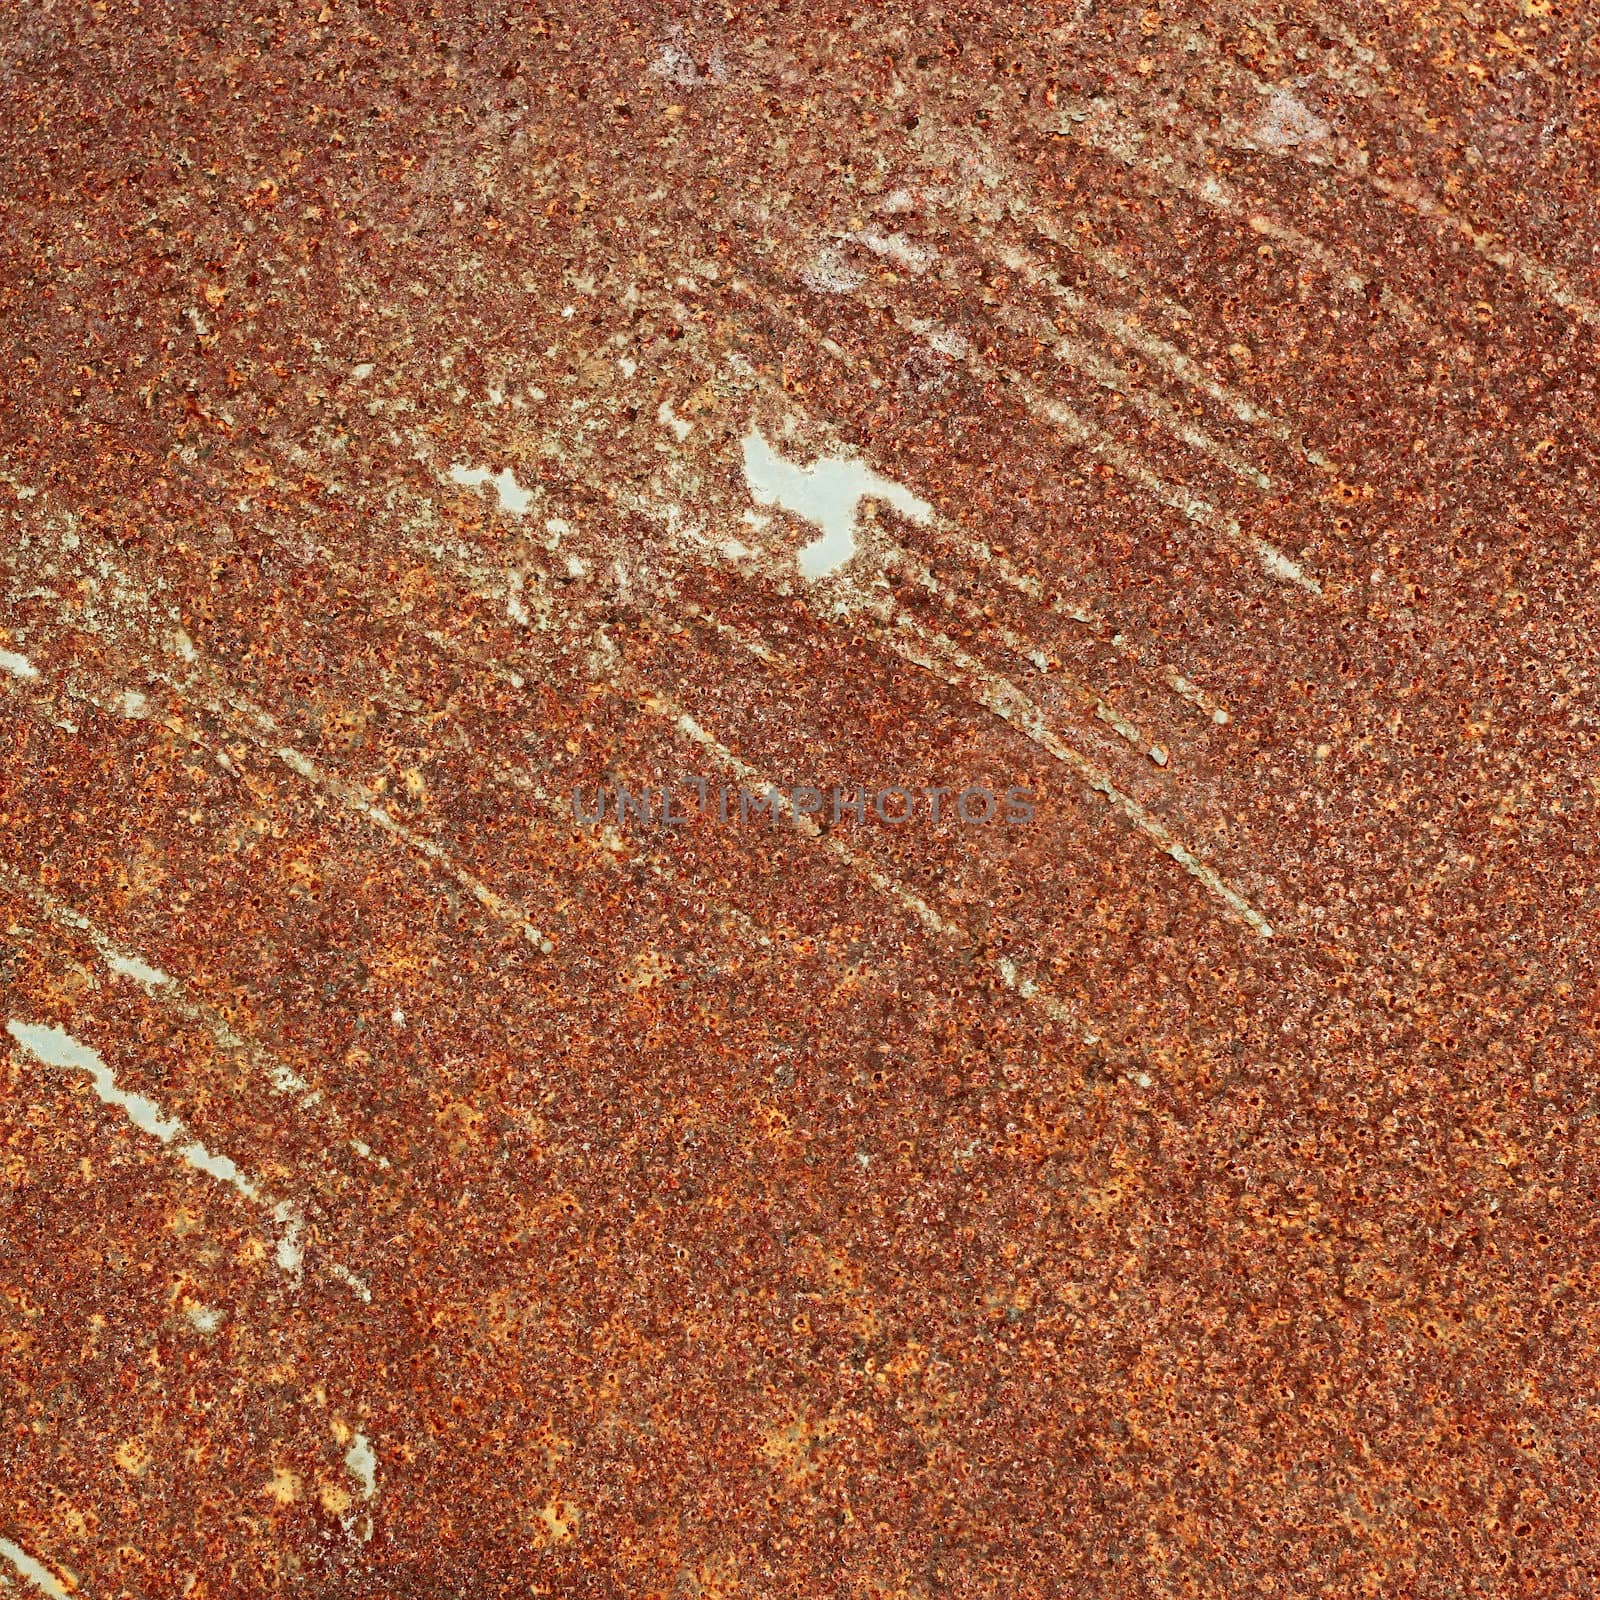 Rusty metal sheet by qiiip